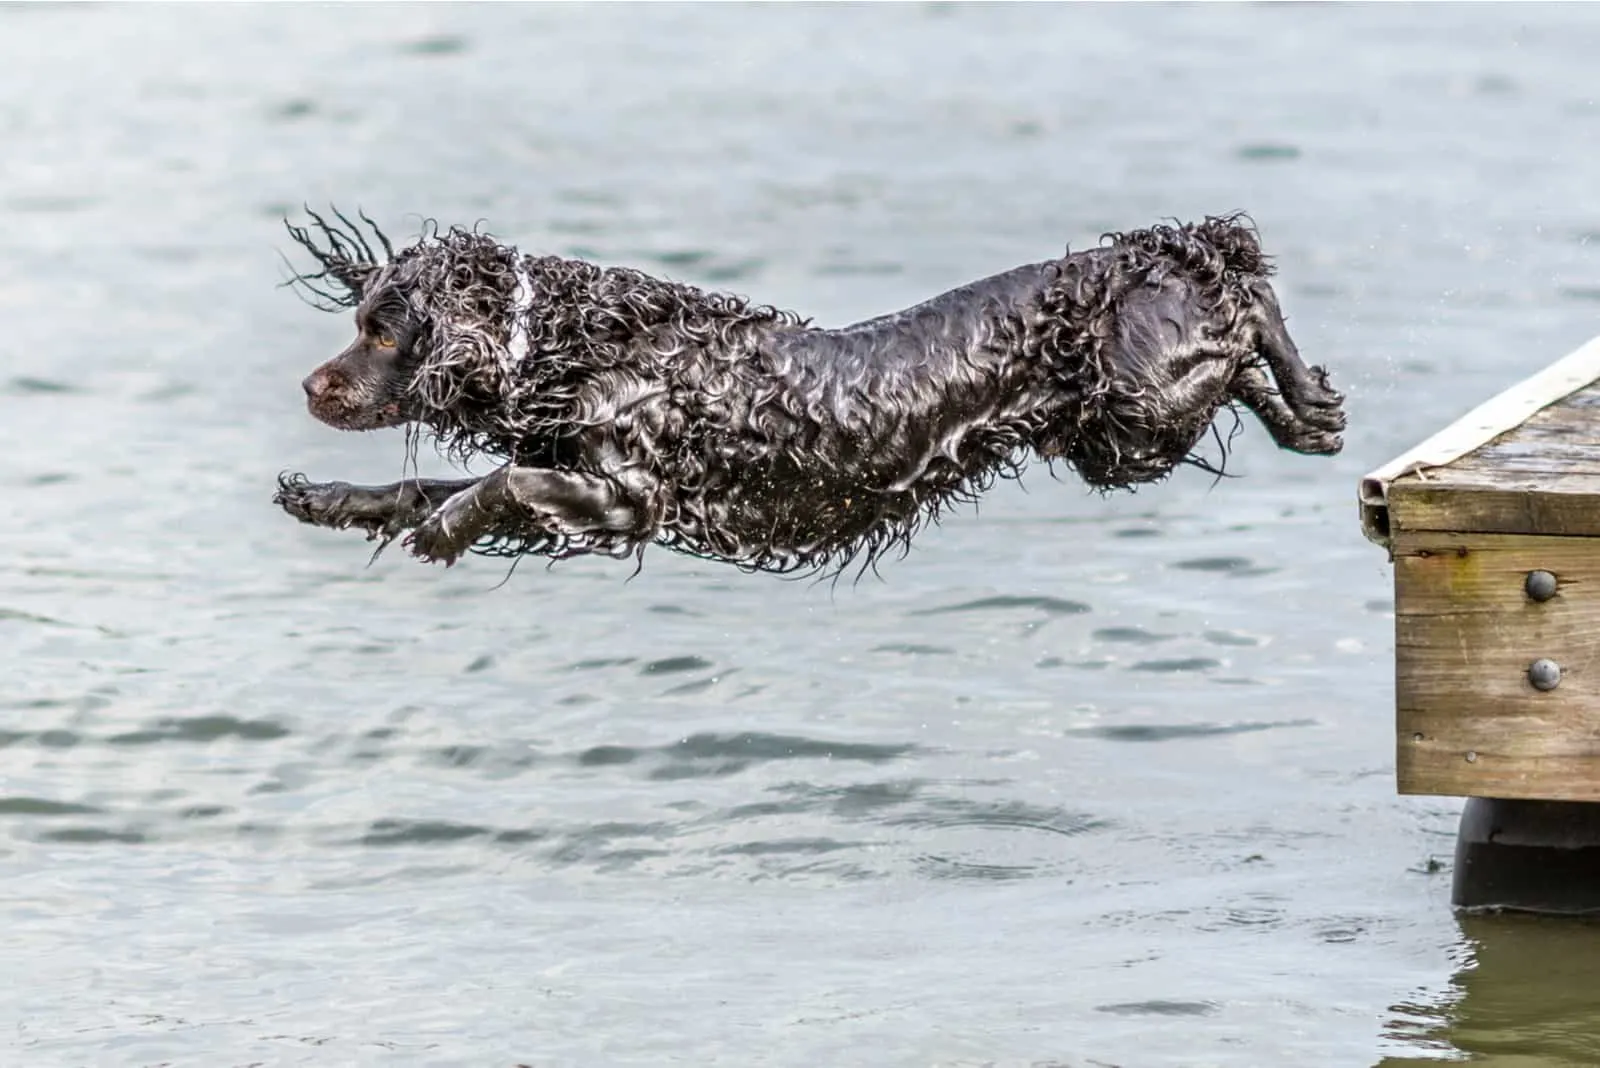 boykin spaniel jumping in the sea